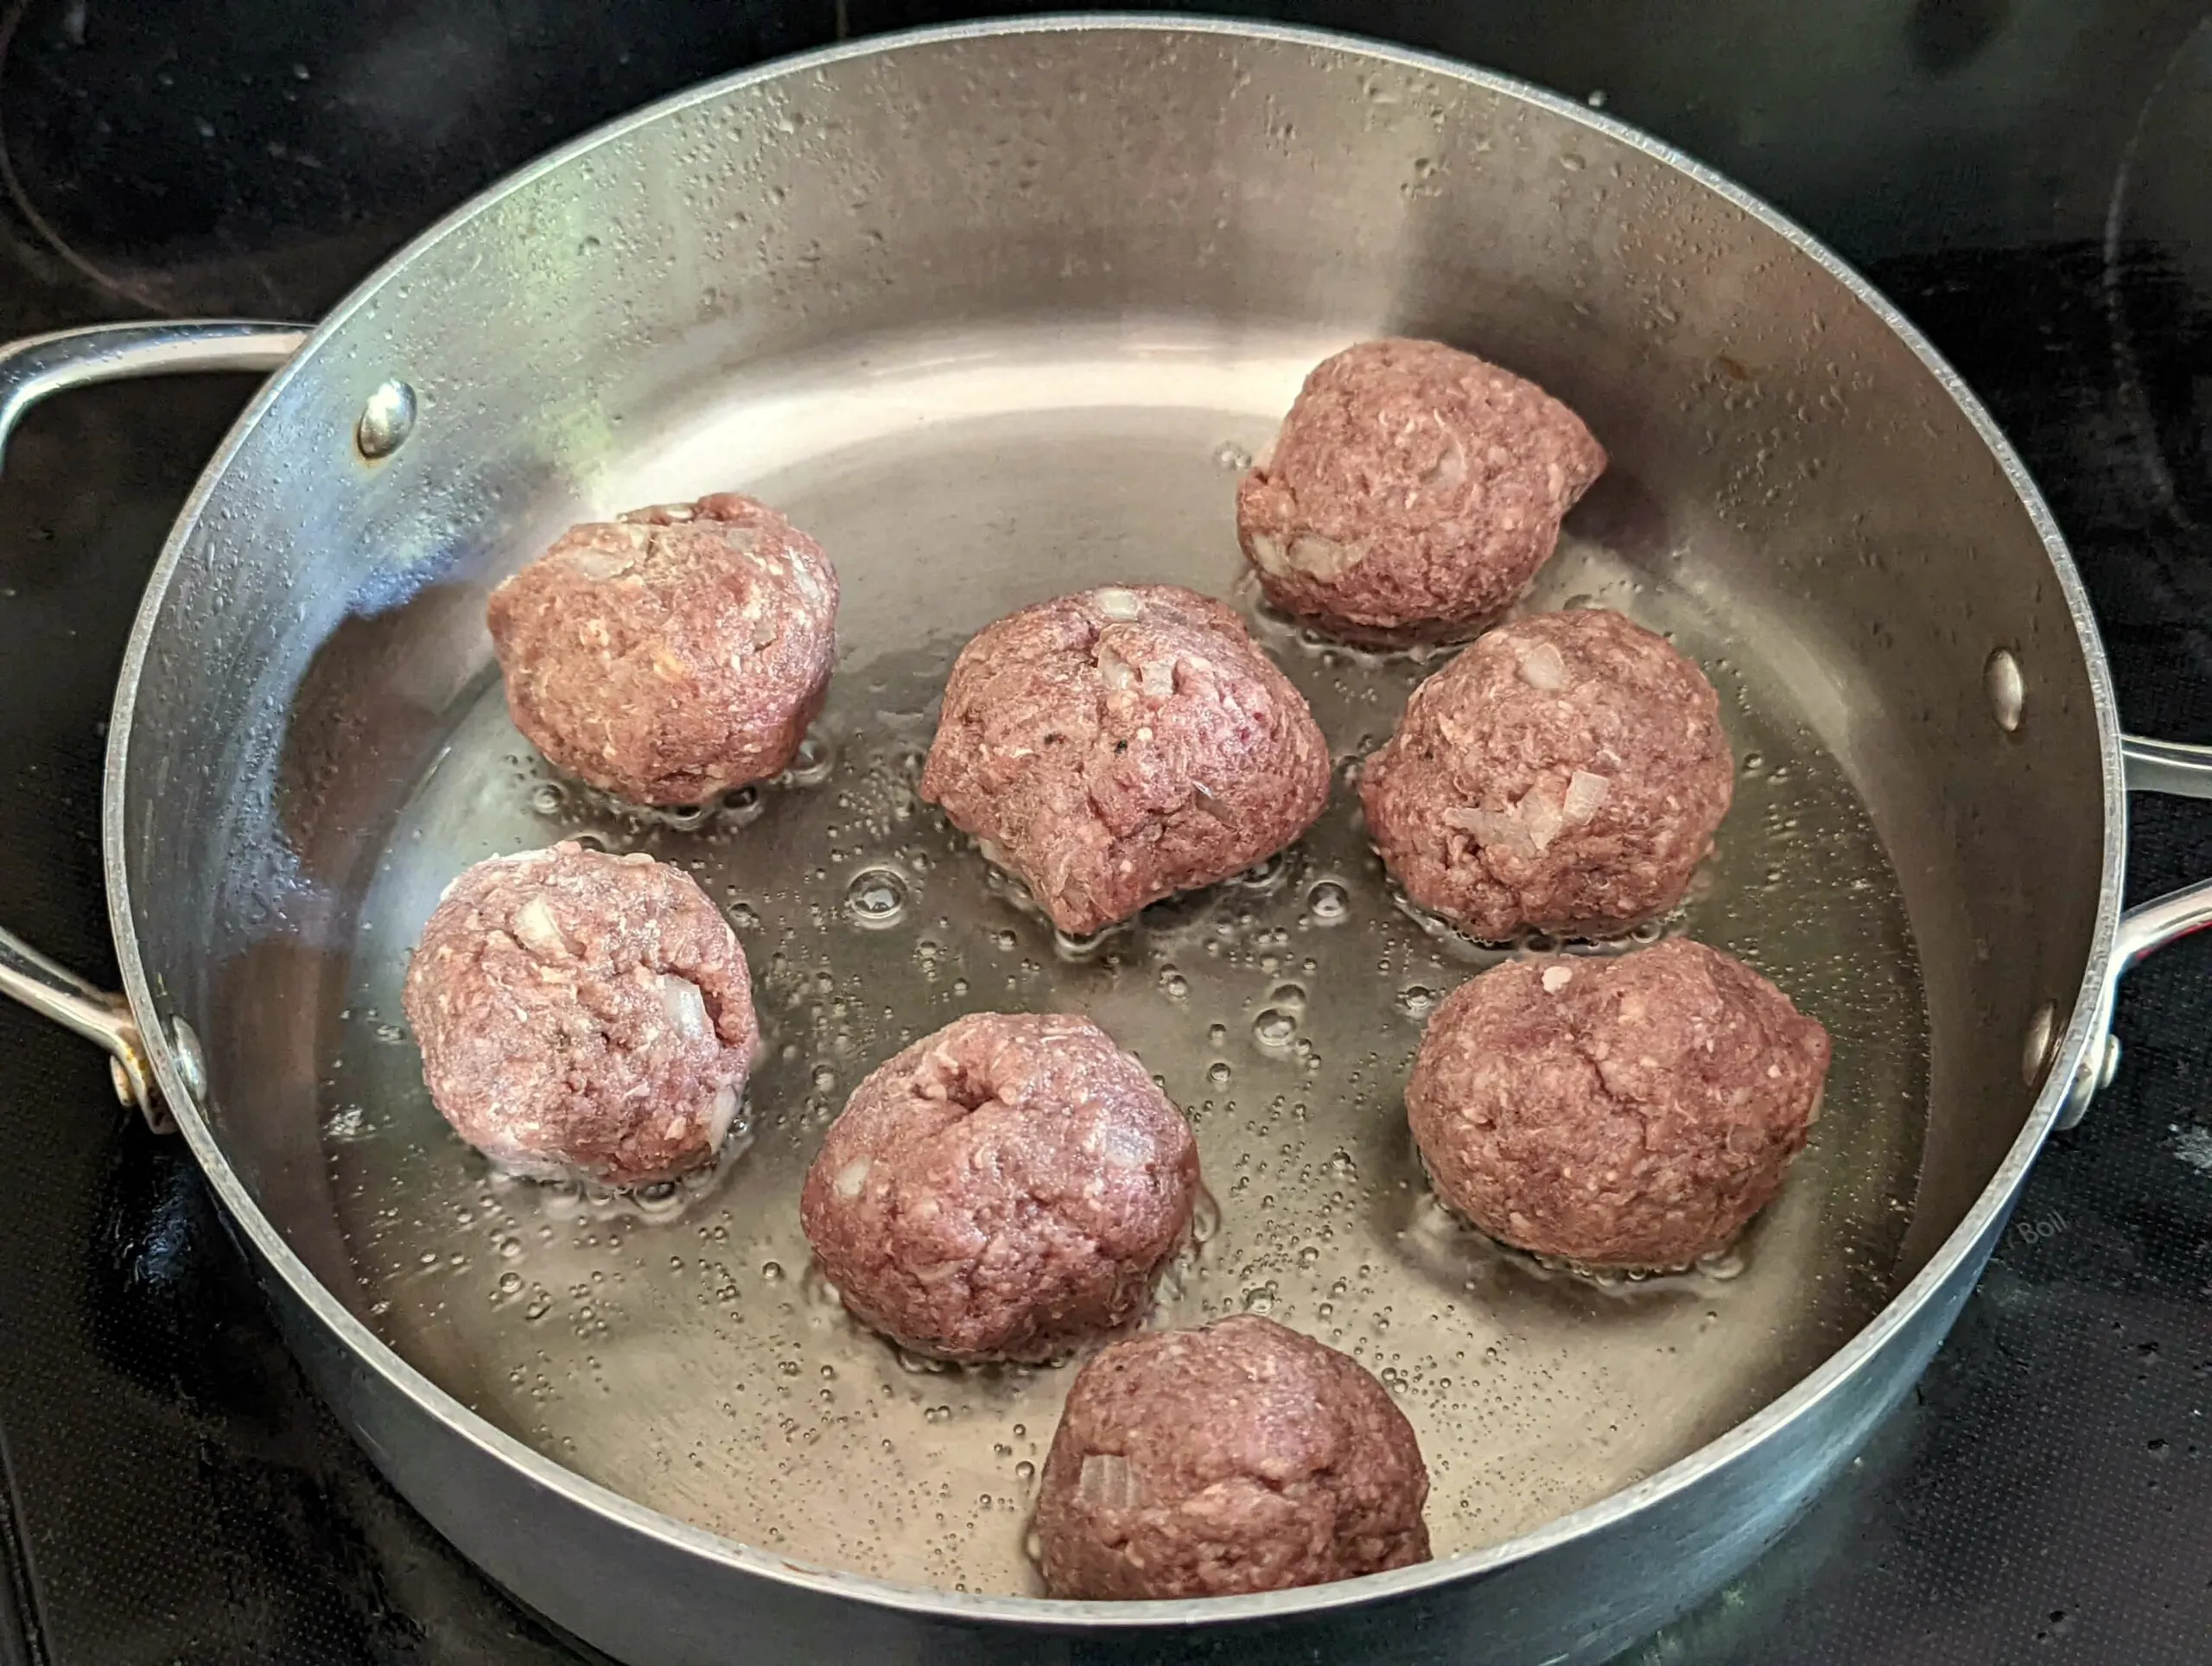 Meatballs searing in the pan.